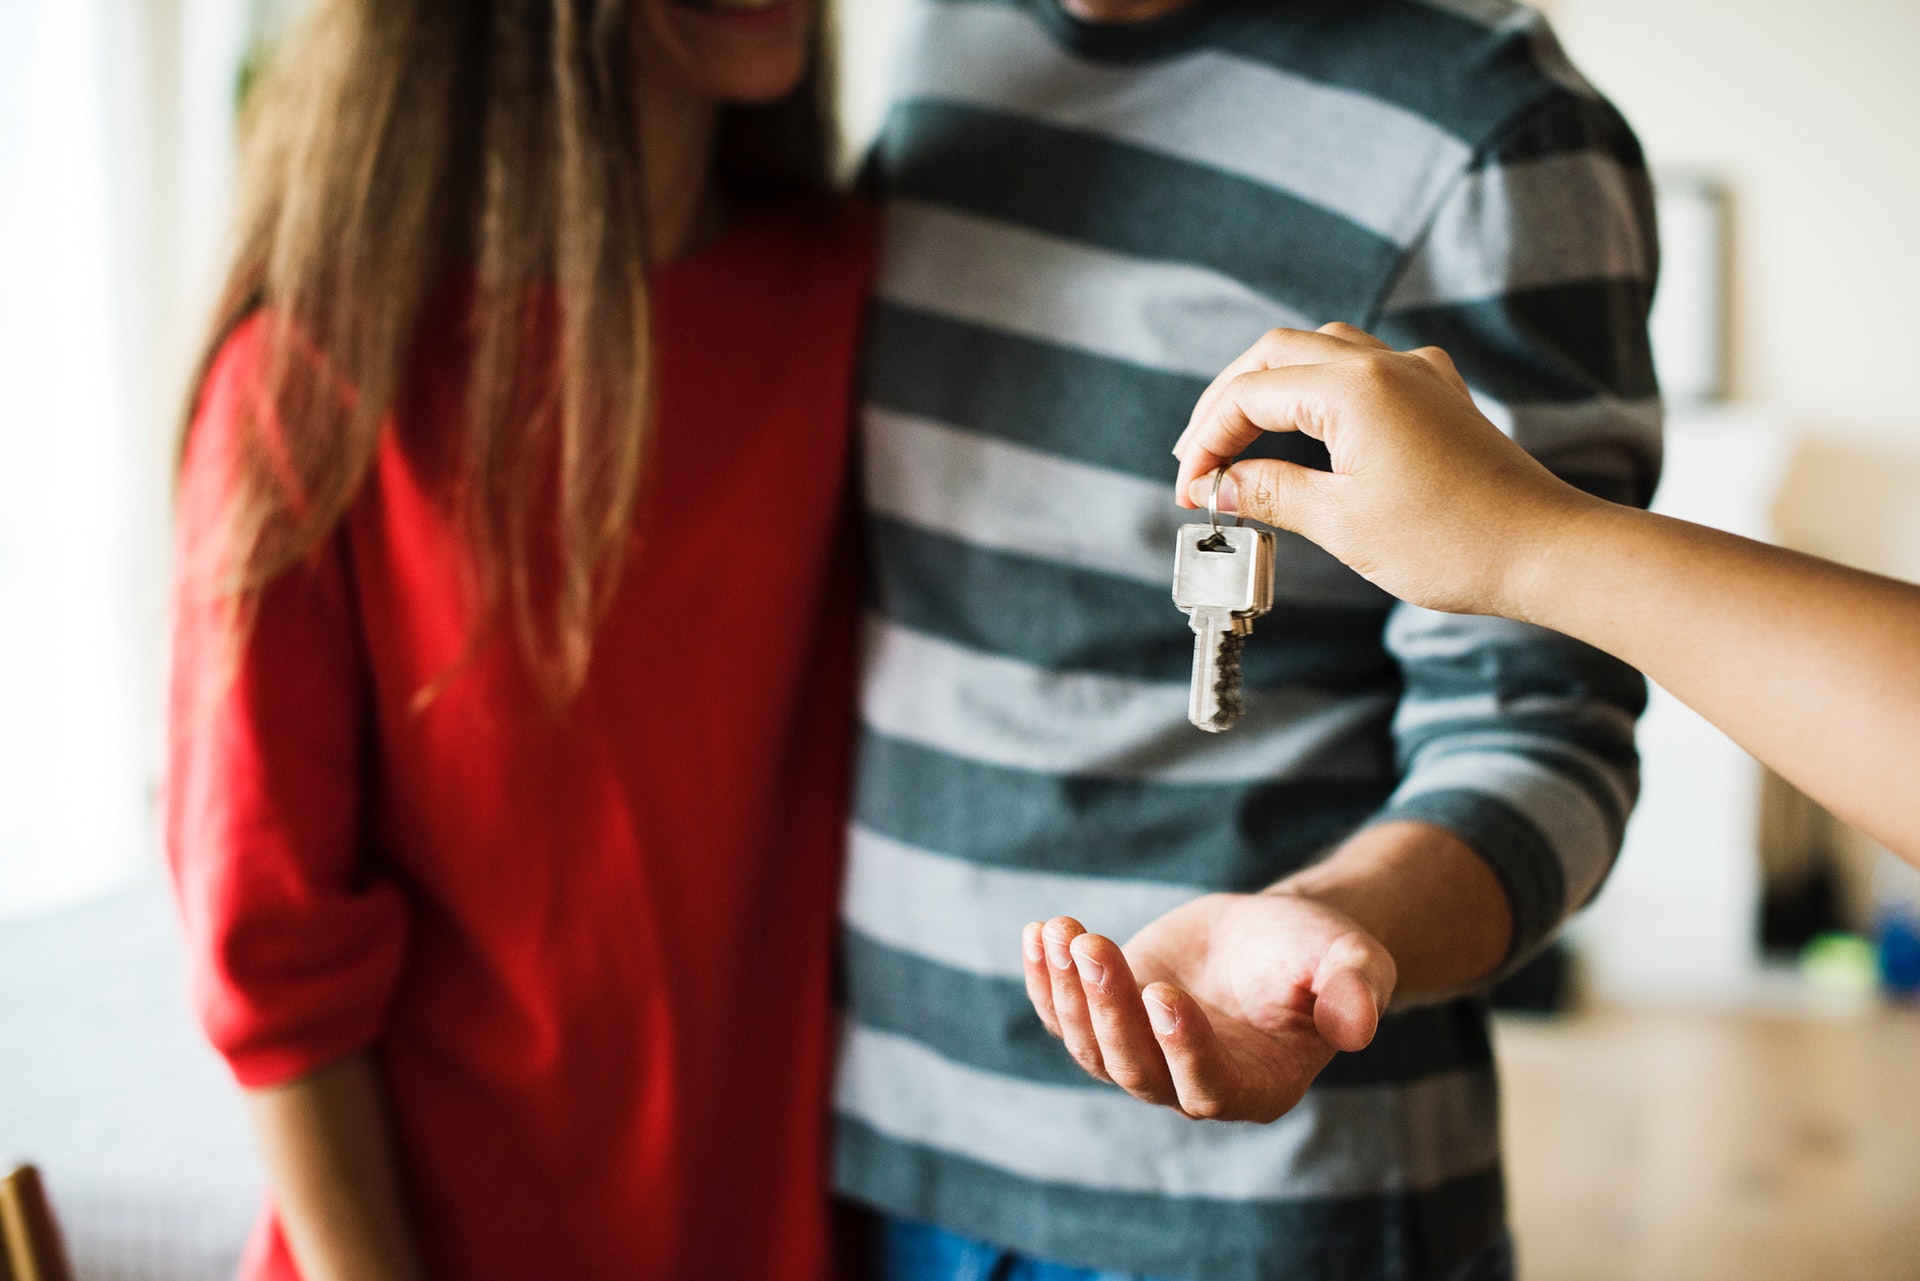 Handing the keys over to new tenants